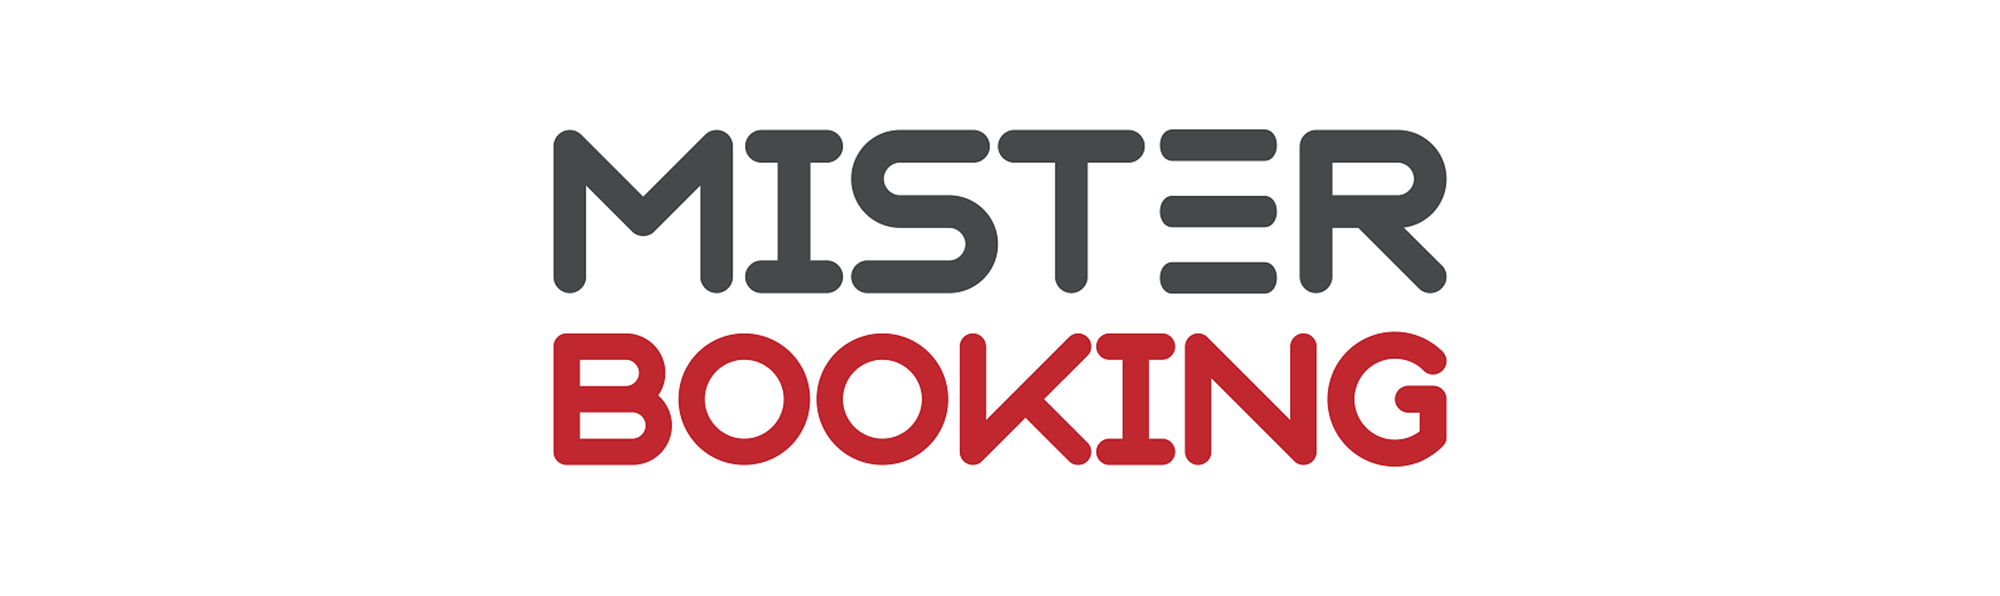 Logo_MisterBooking_2000x596